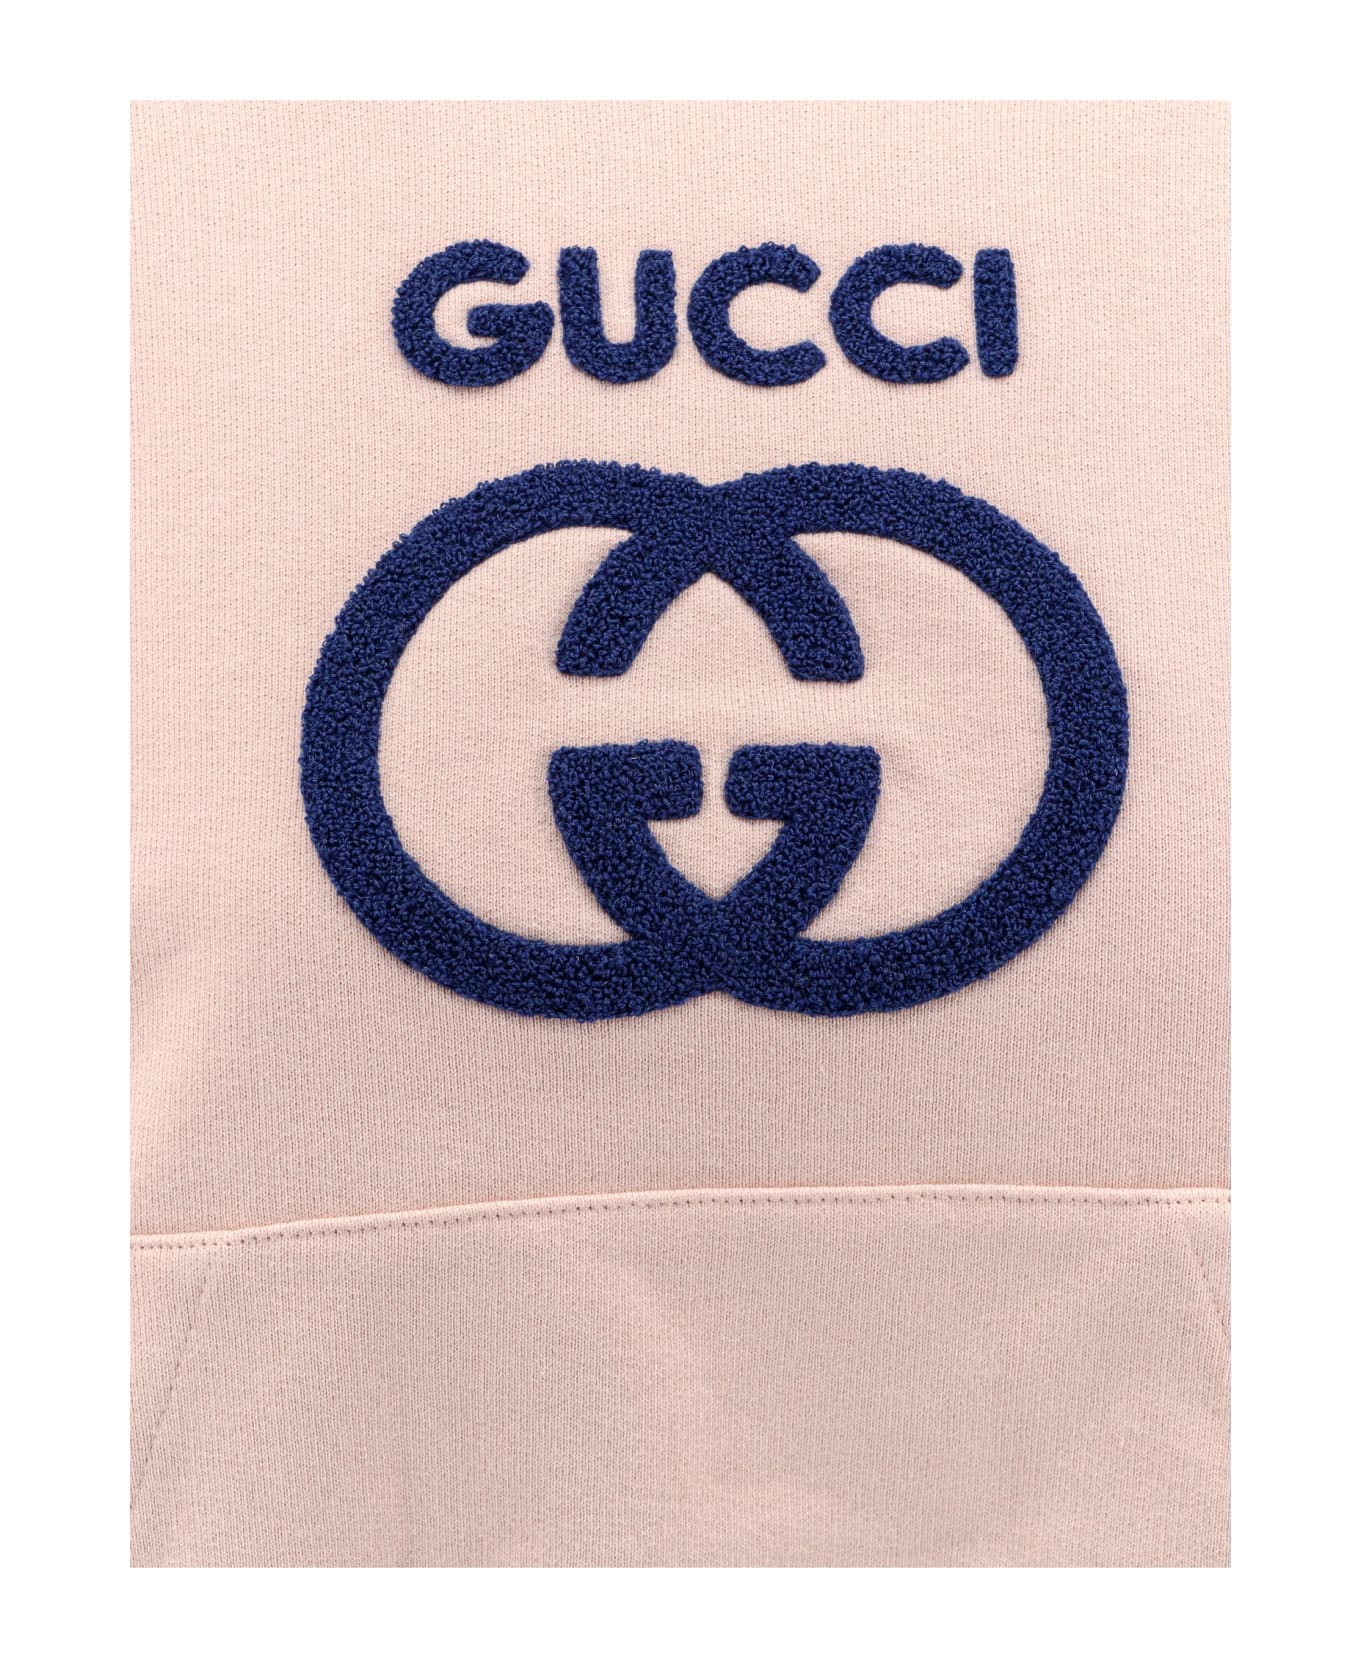 Gucci Sweatshirt - Pink